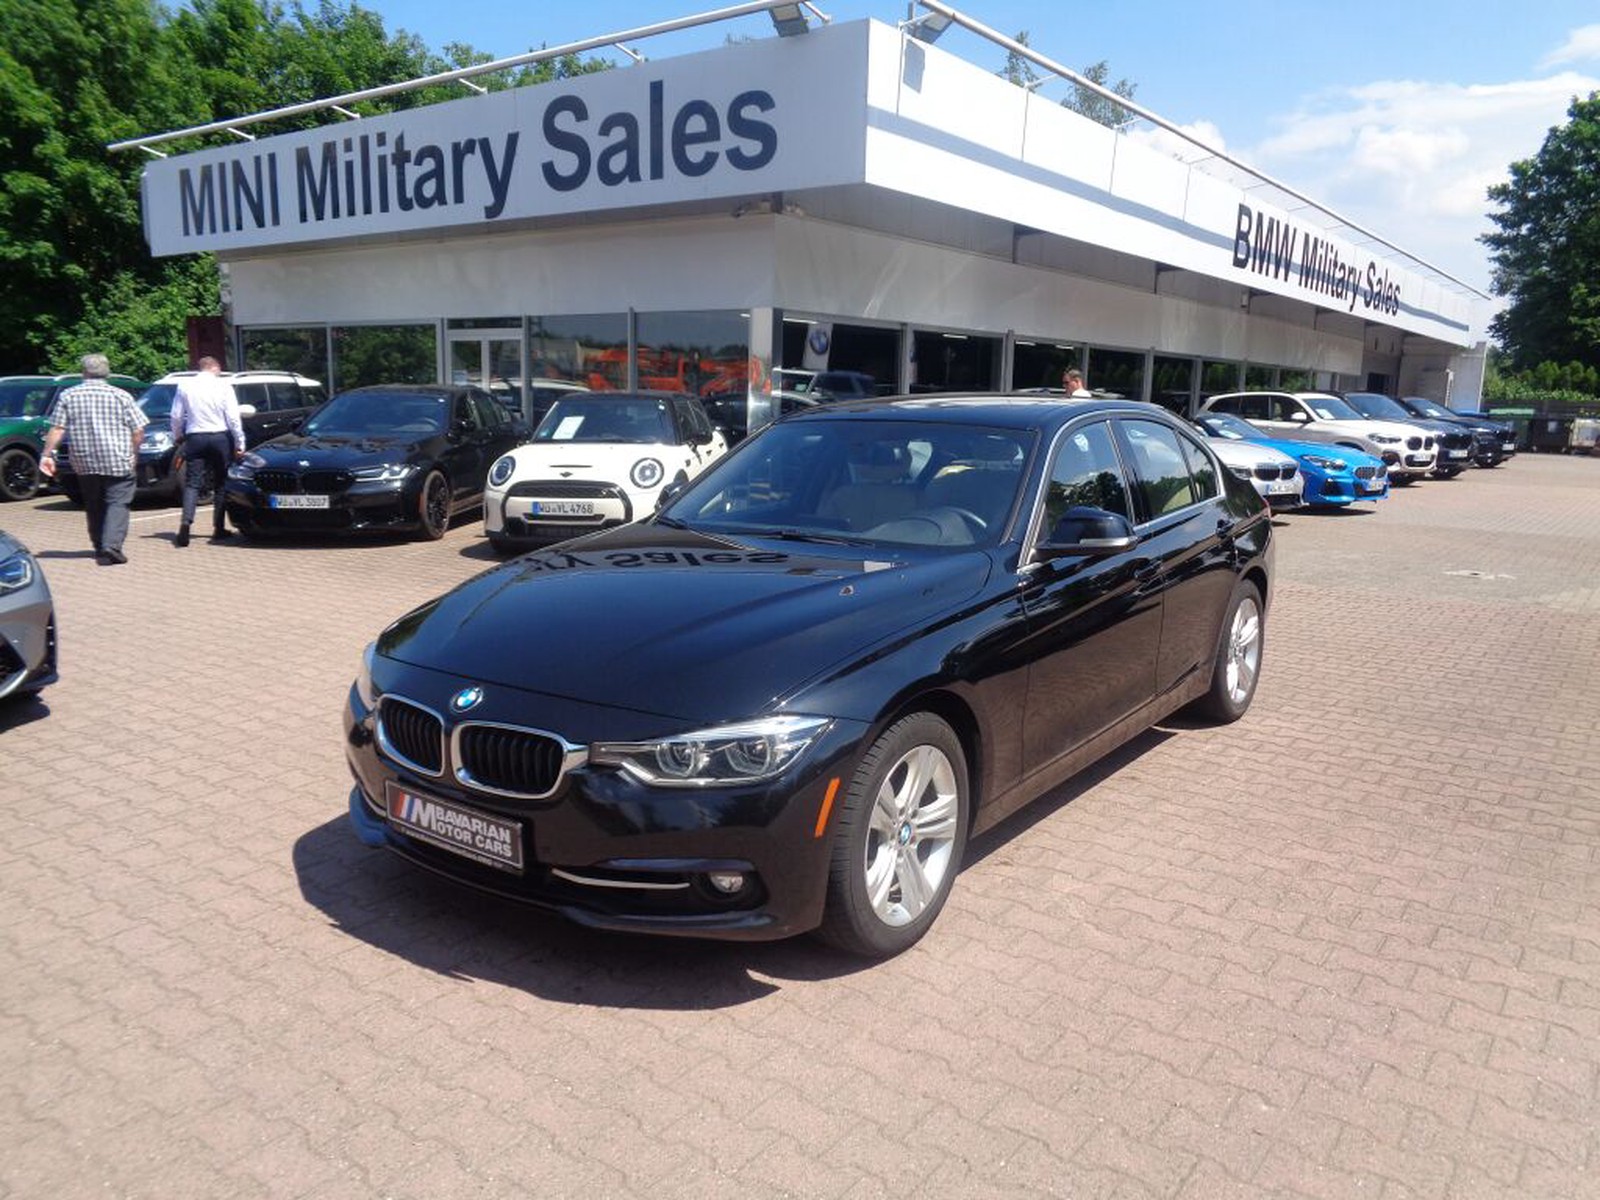 BMW 330 i xDrive Sedan - Tax Free Military Sales in Ramstein-Miesenbach